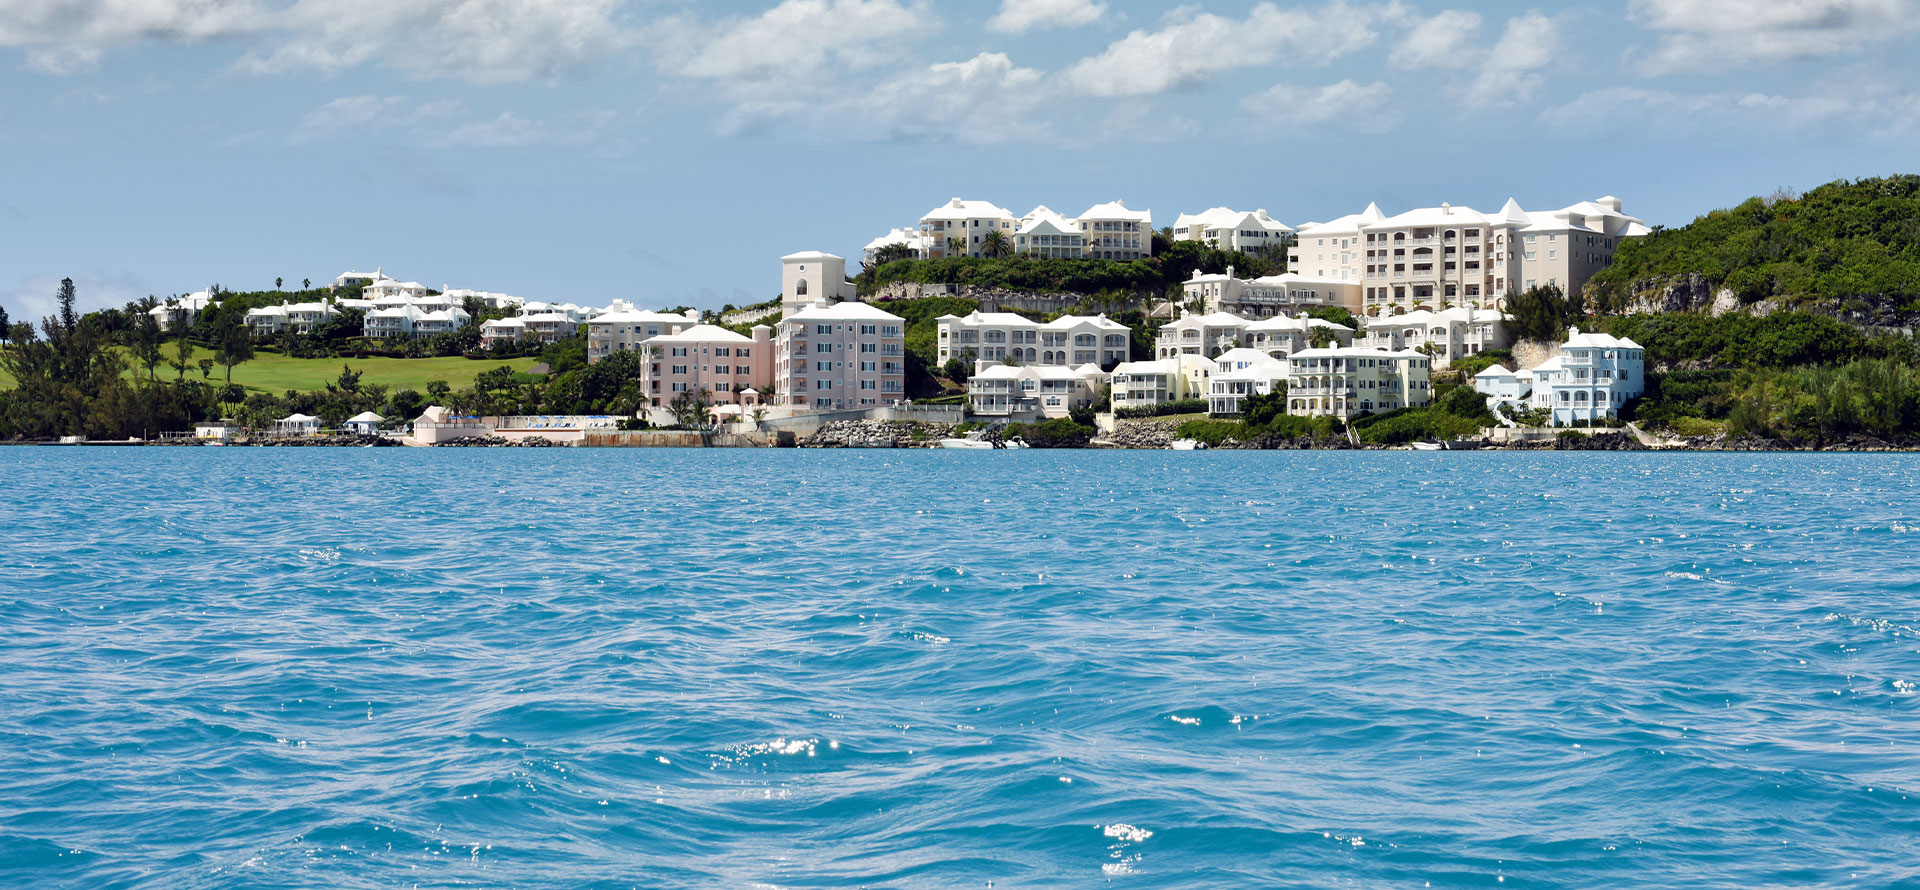 Bermuda honeymoon resorts near beach.